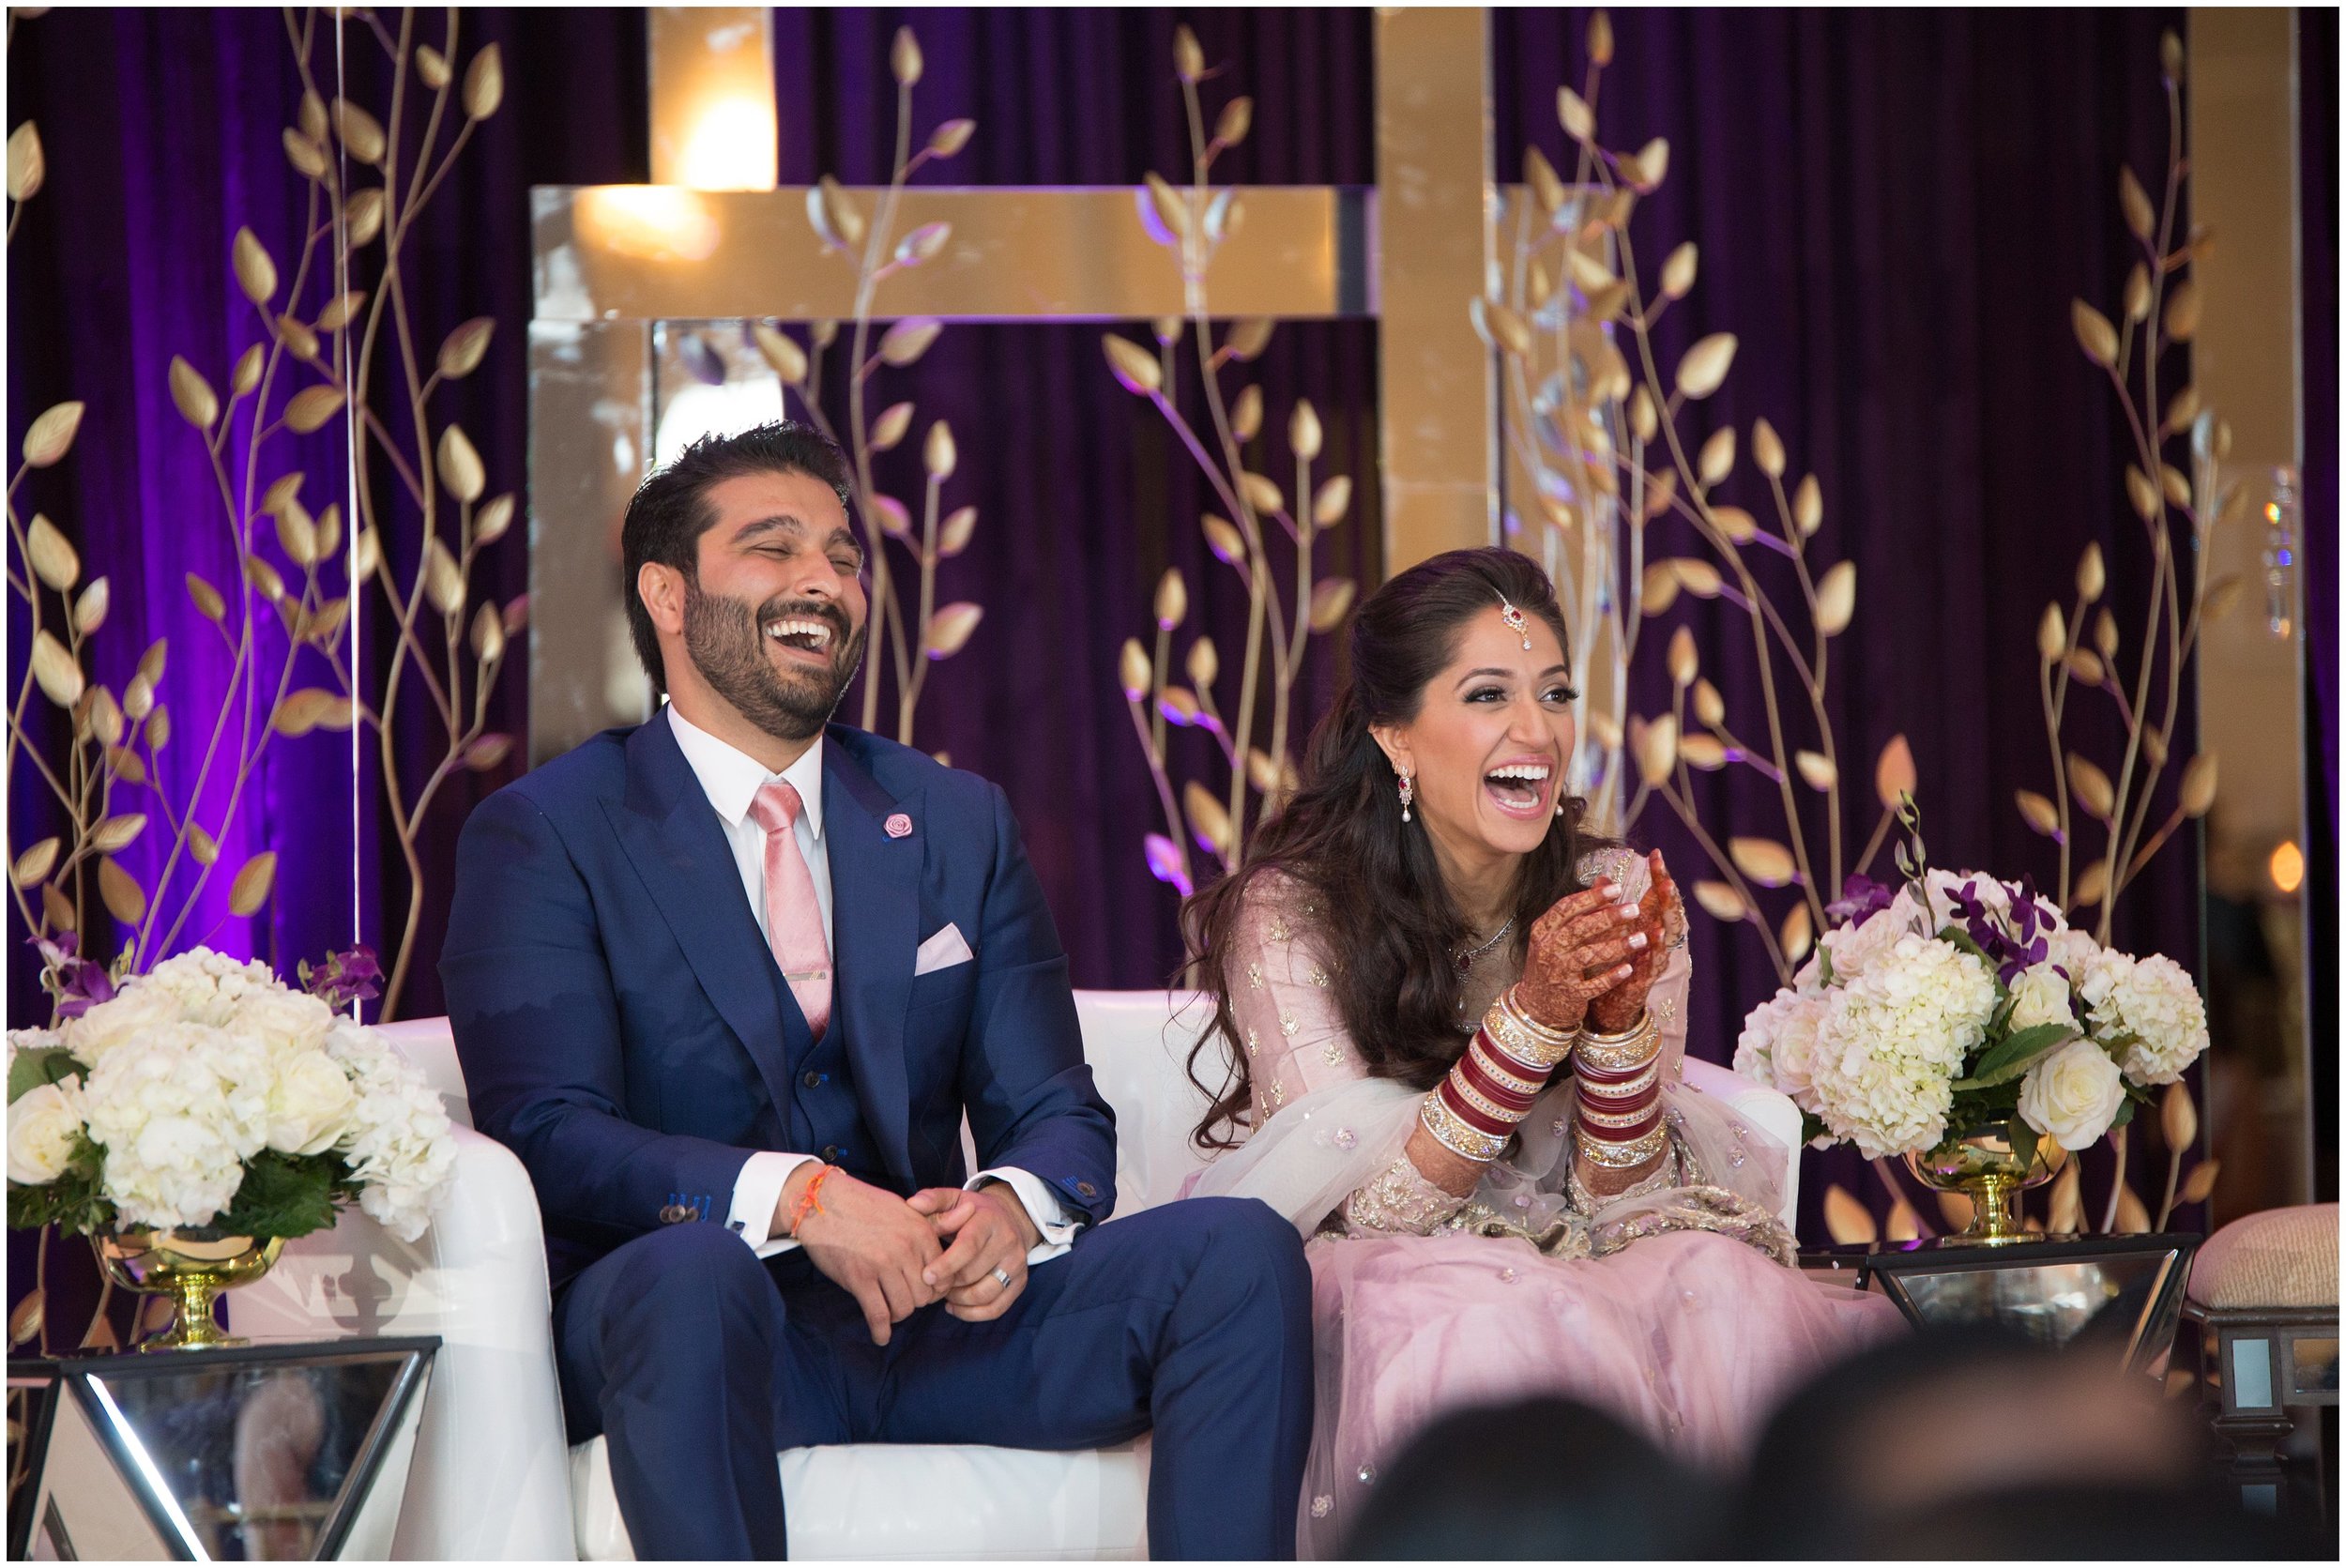 Le Cape Weddings - South Asian Wedding in Illinois - Tanvi and Anshul -2554_LuxuryDestinationPhotographer.jpg